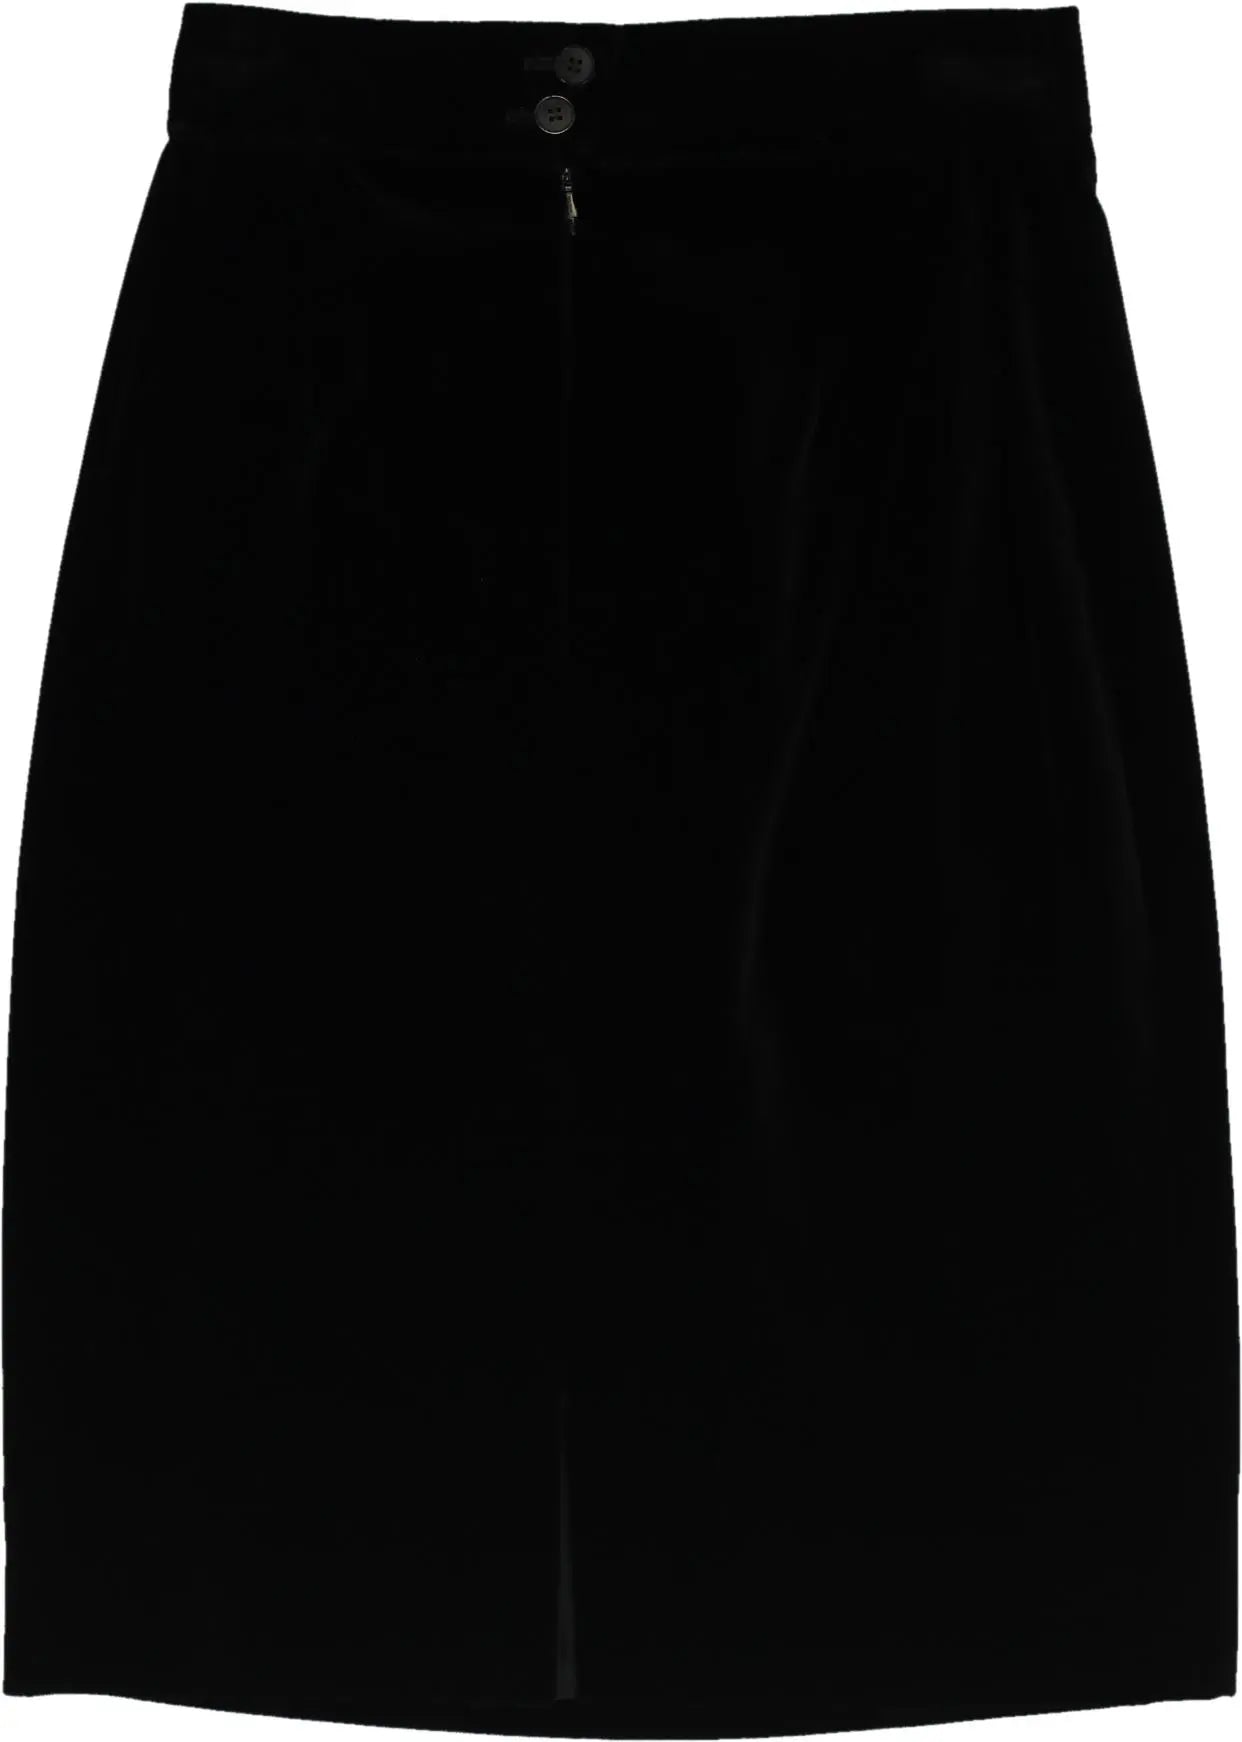 Widudress - 80s Velvet Skirt- ThriftTale.com - Vintage and second handclothing